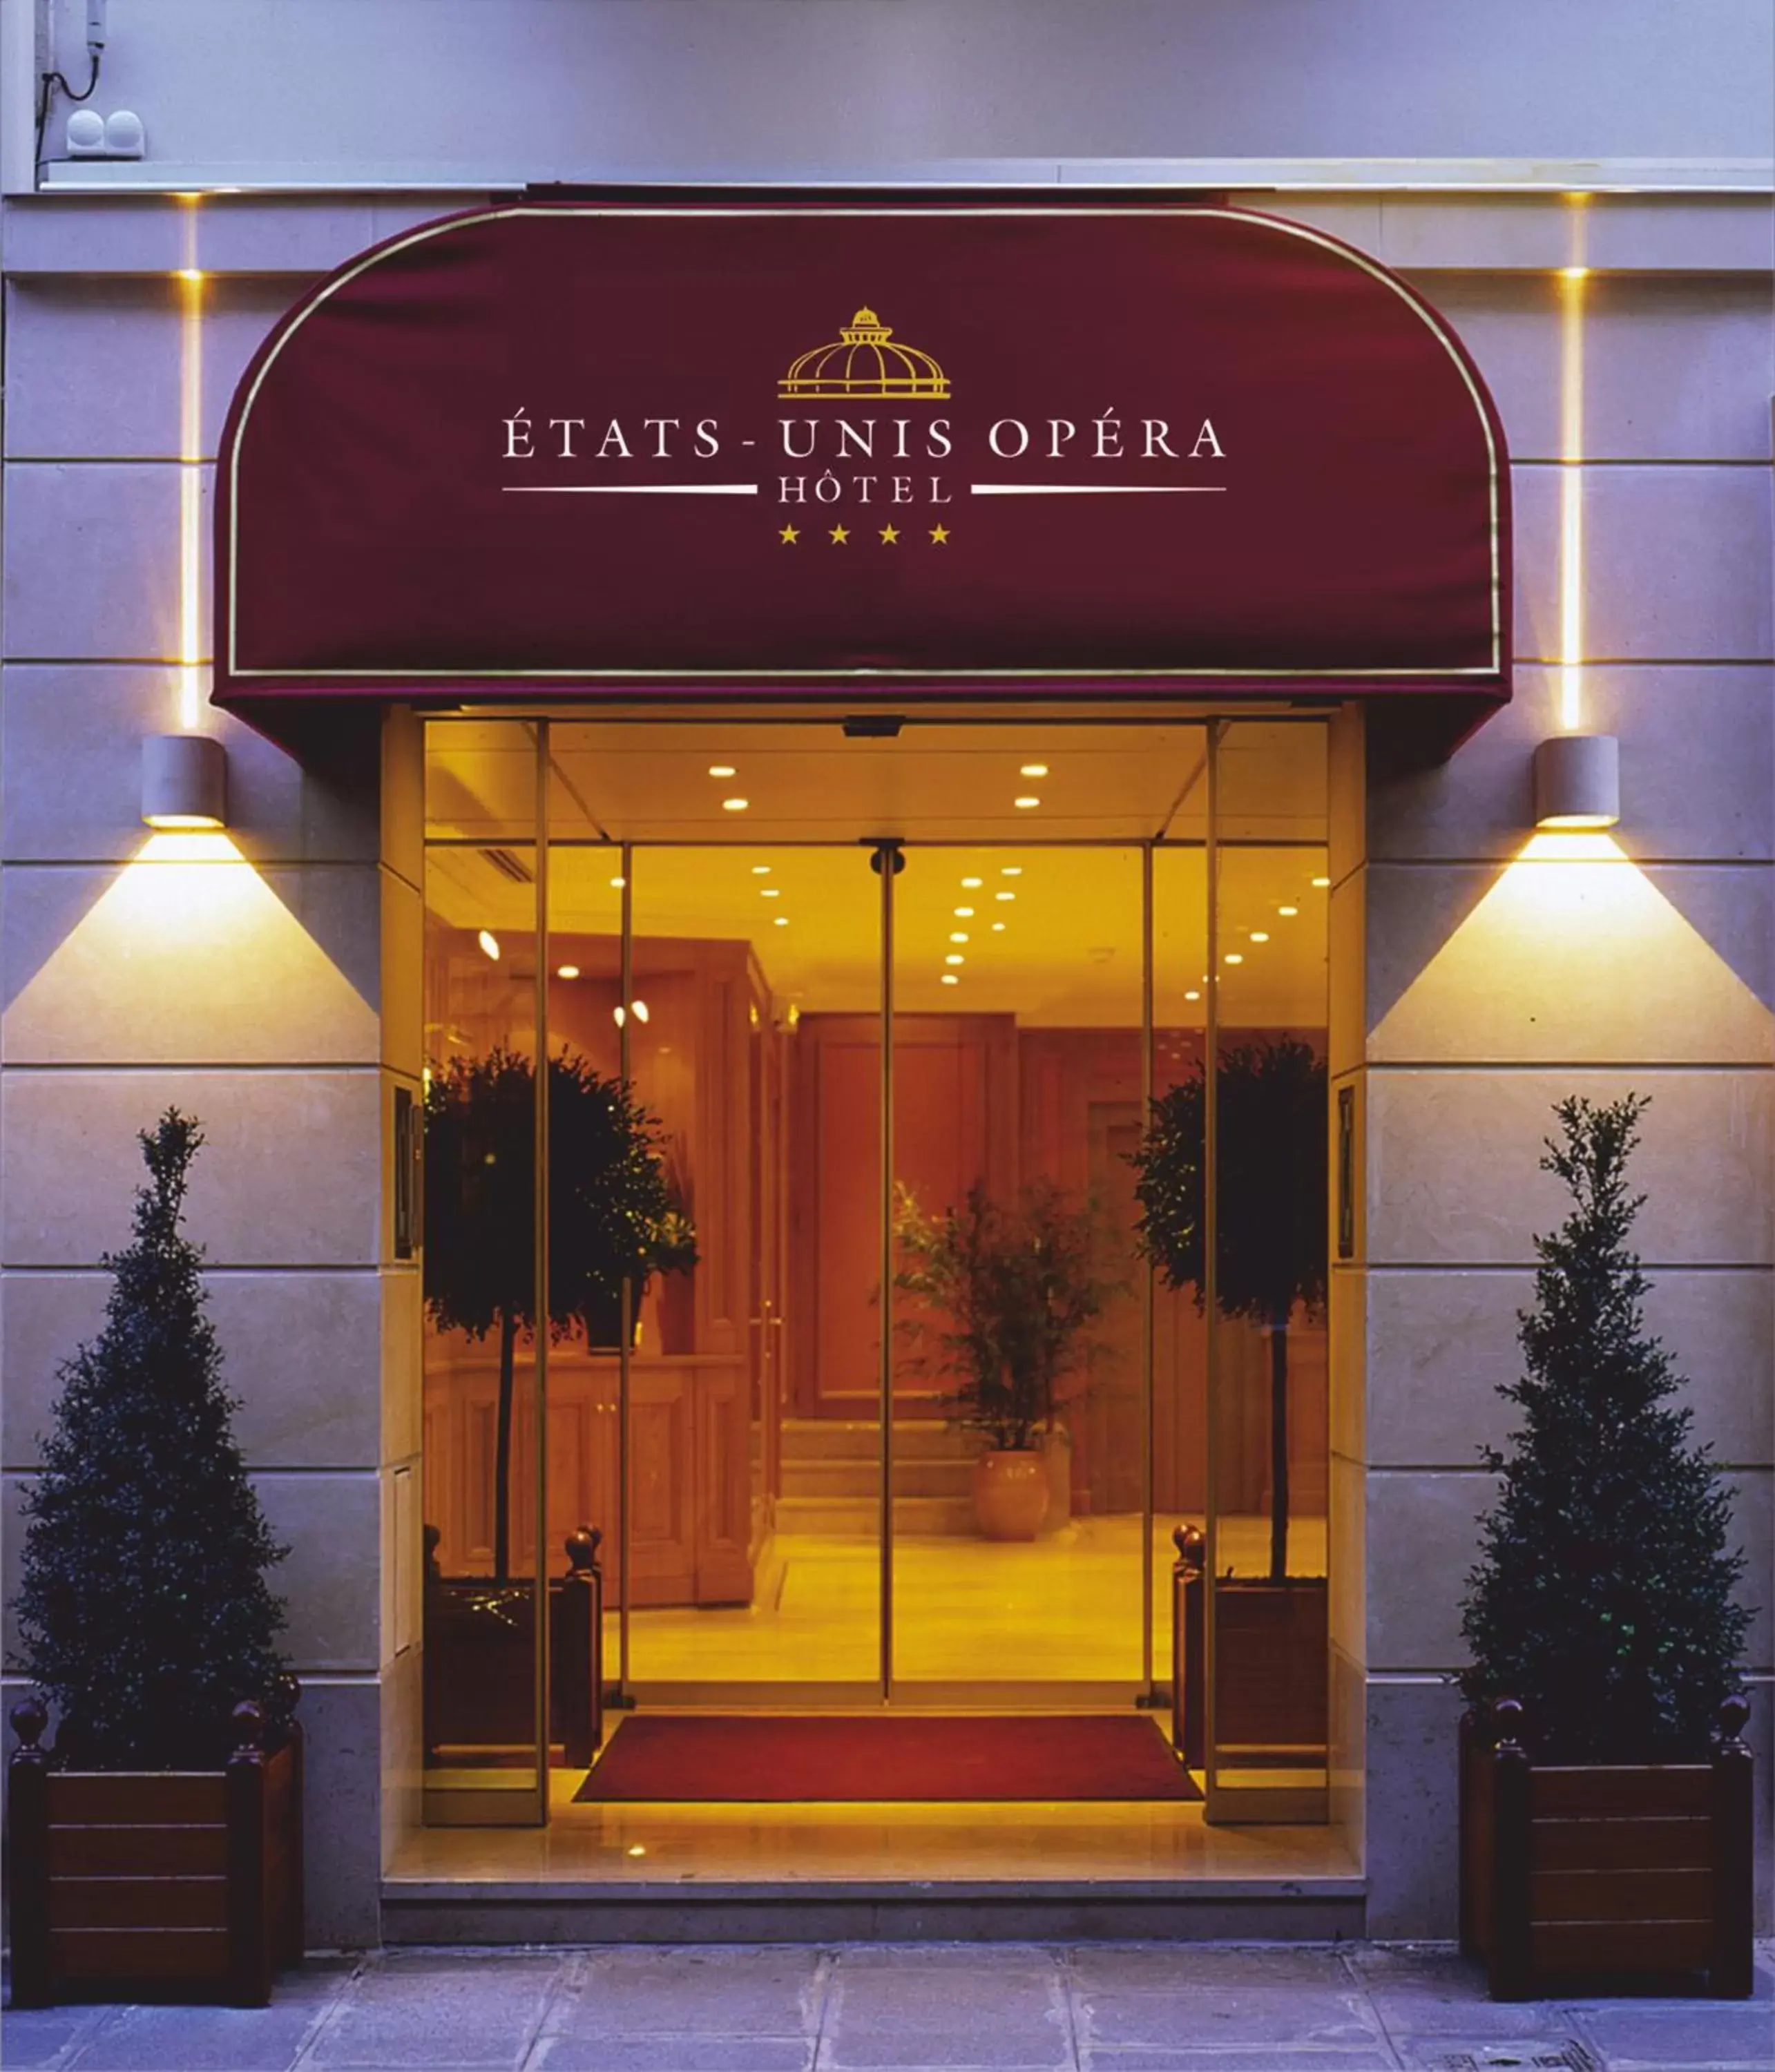 Facade/Entrance in Hotel Etats Unis Opera